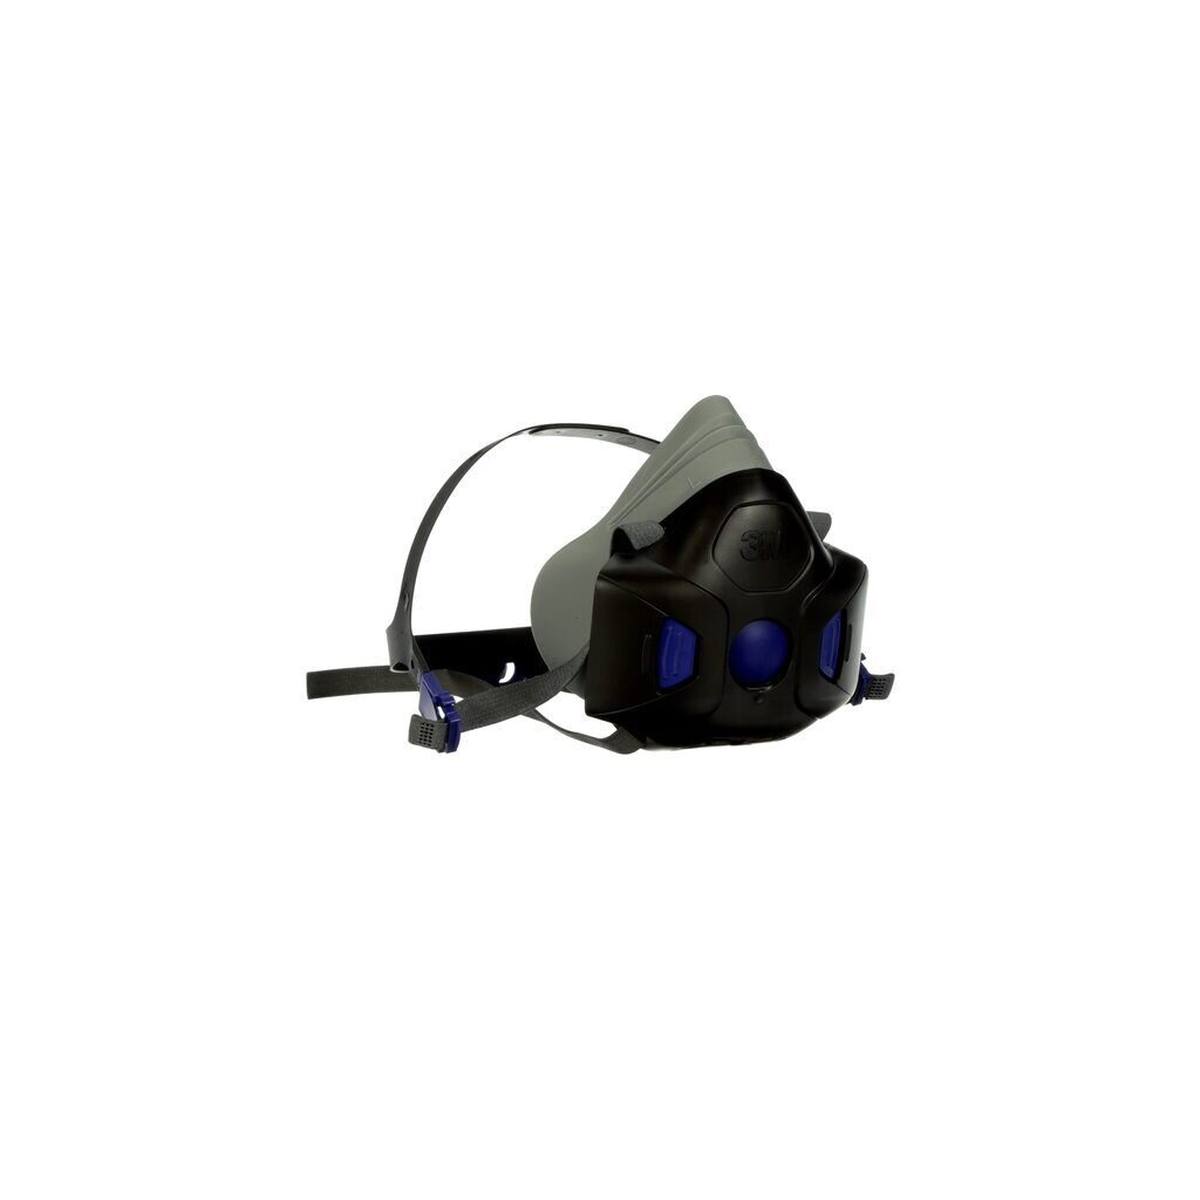 3M Secure Click media máscara HF-803 Slikon talla L